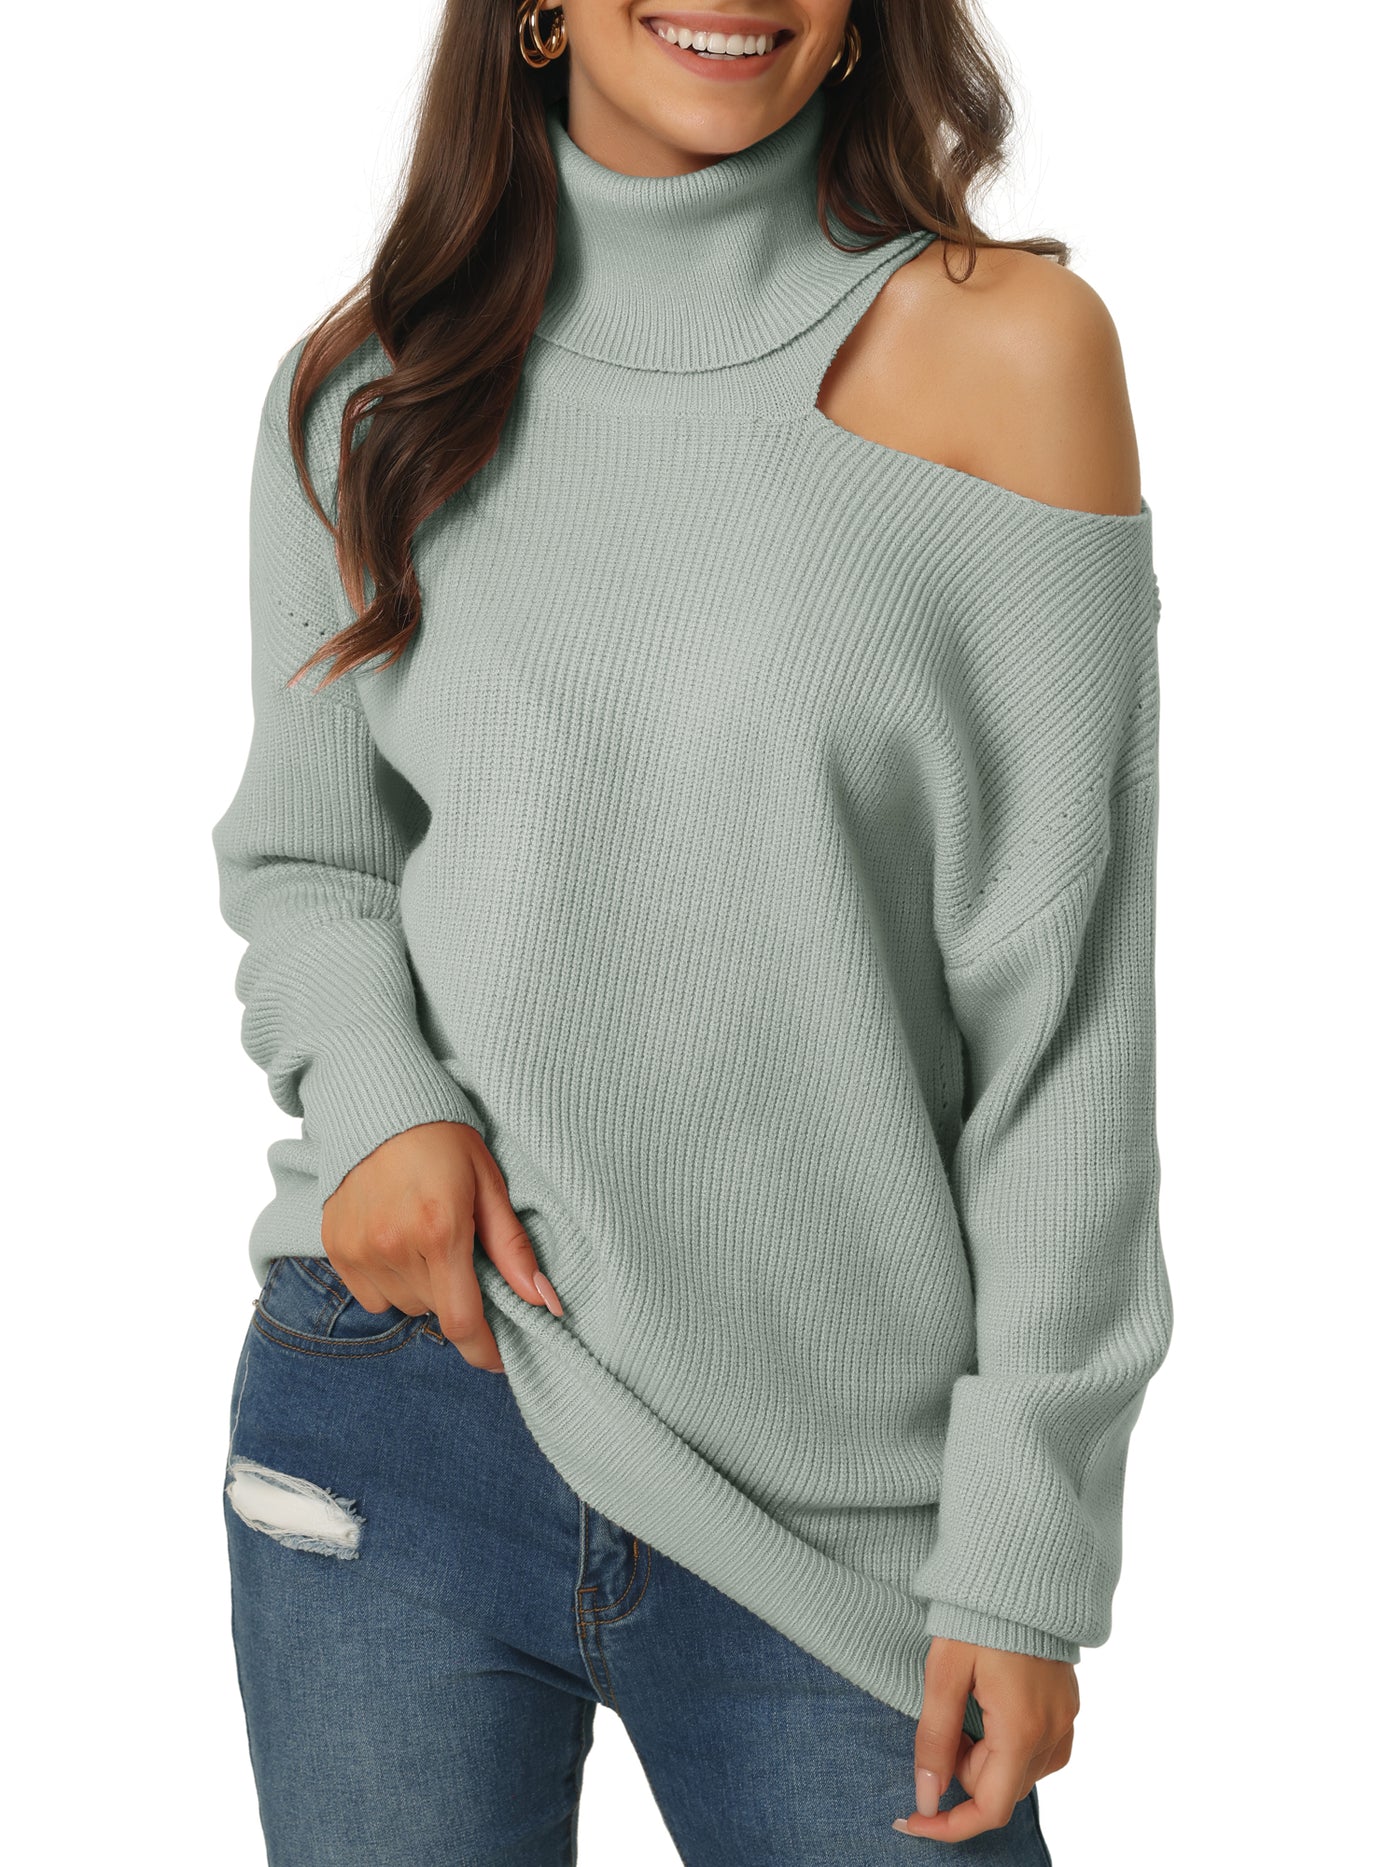 Bublédon Womens' High Neck Cut Shoulder Long Sleeve Fall Winter Casual Sweater